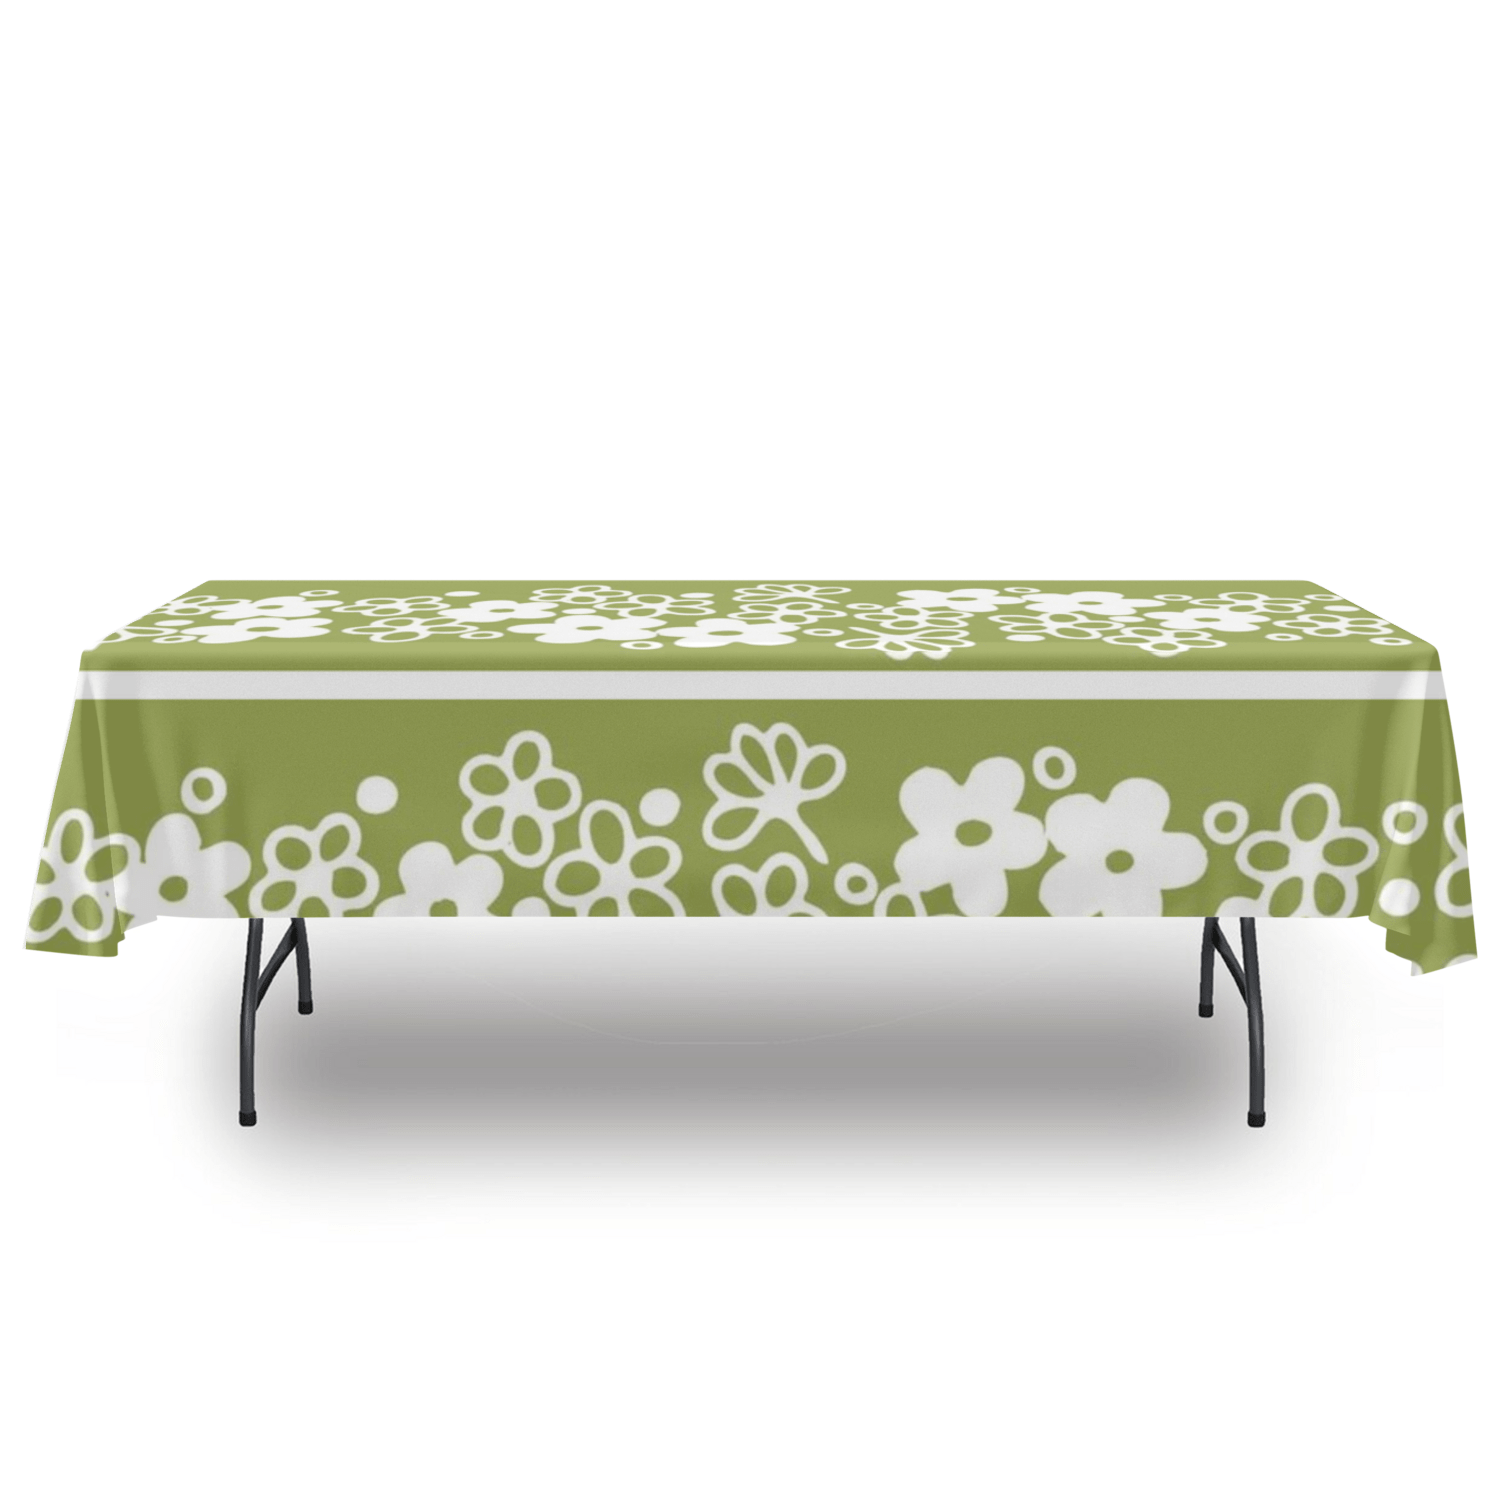 Retro Green, Spring Blossom, Pyrex Lover, Mod Daisy MCM Tablecloth tablecloth